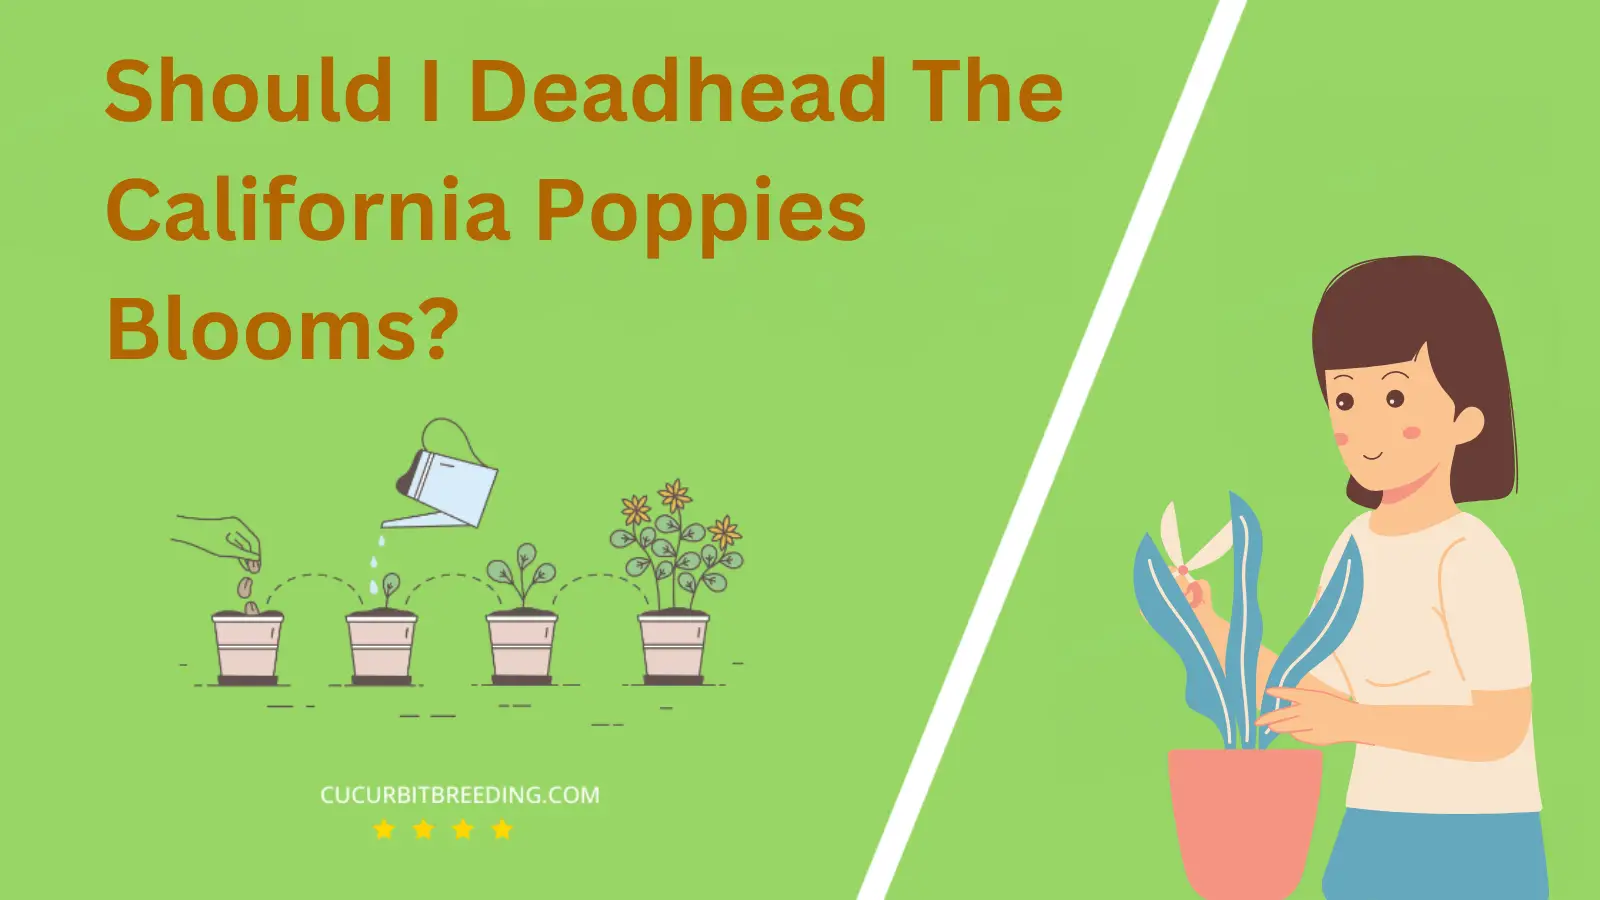 Should I Deadhead The California Poppies Blooms?